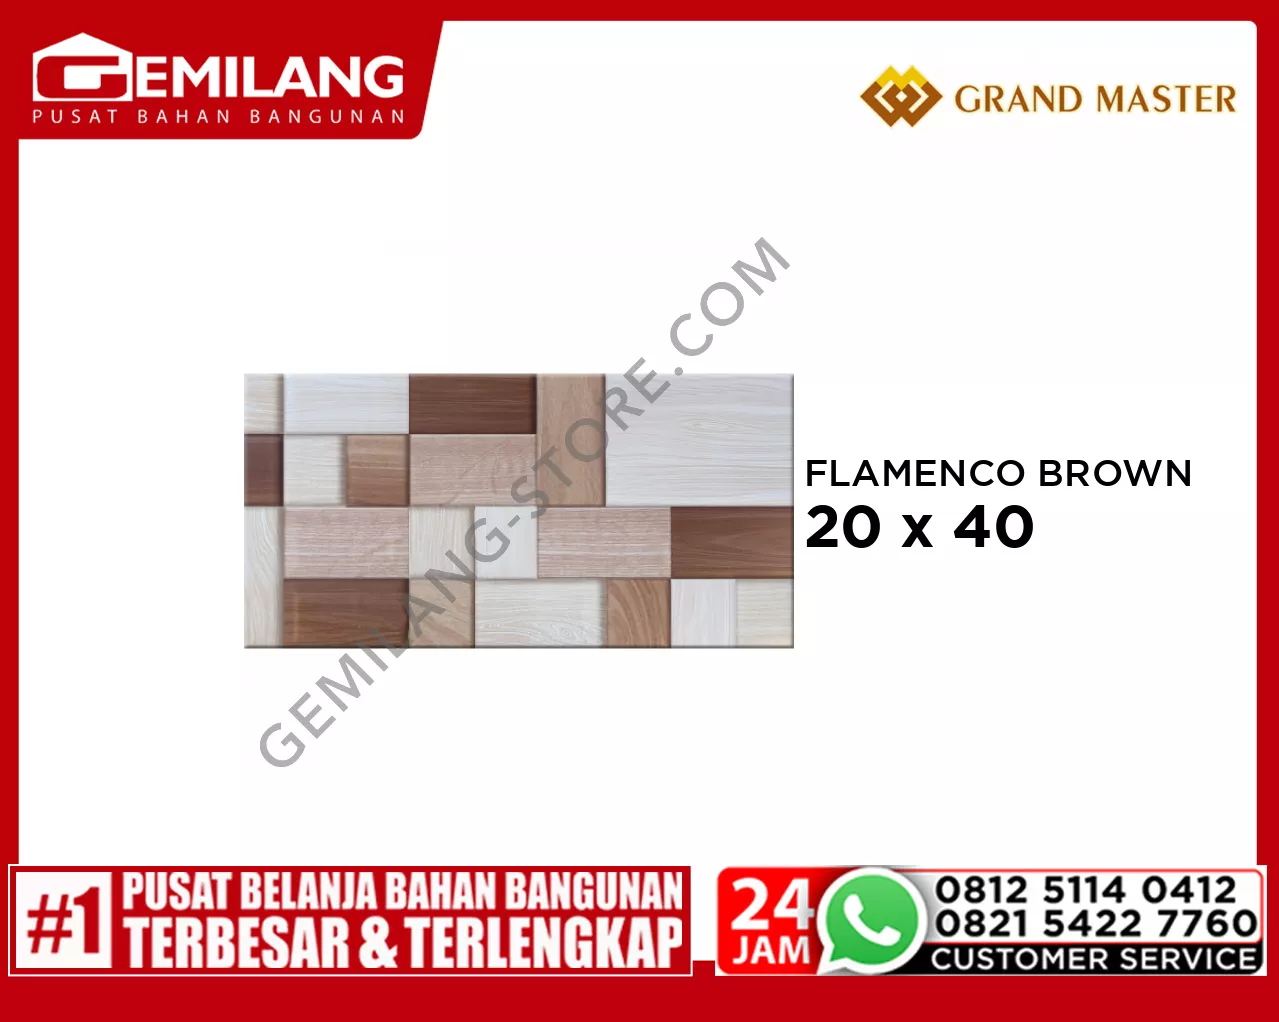 GRAND MASTER FLAMENCO BROWN 20 x 40